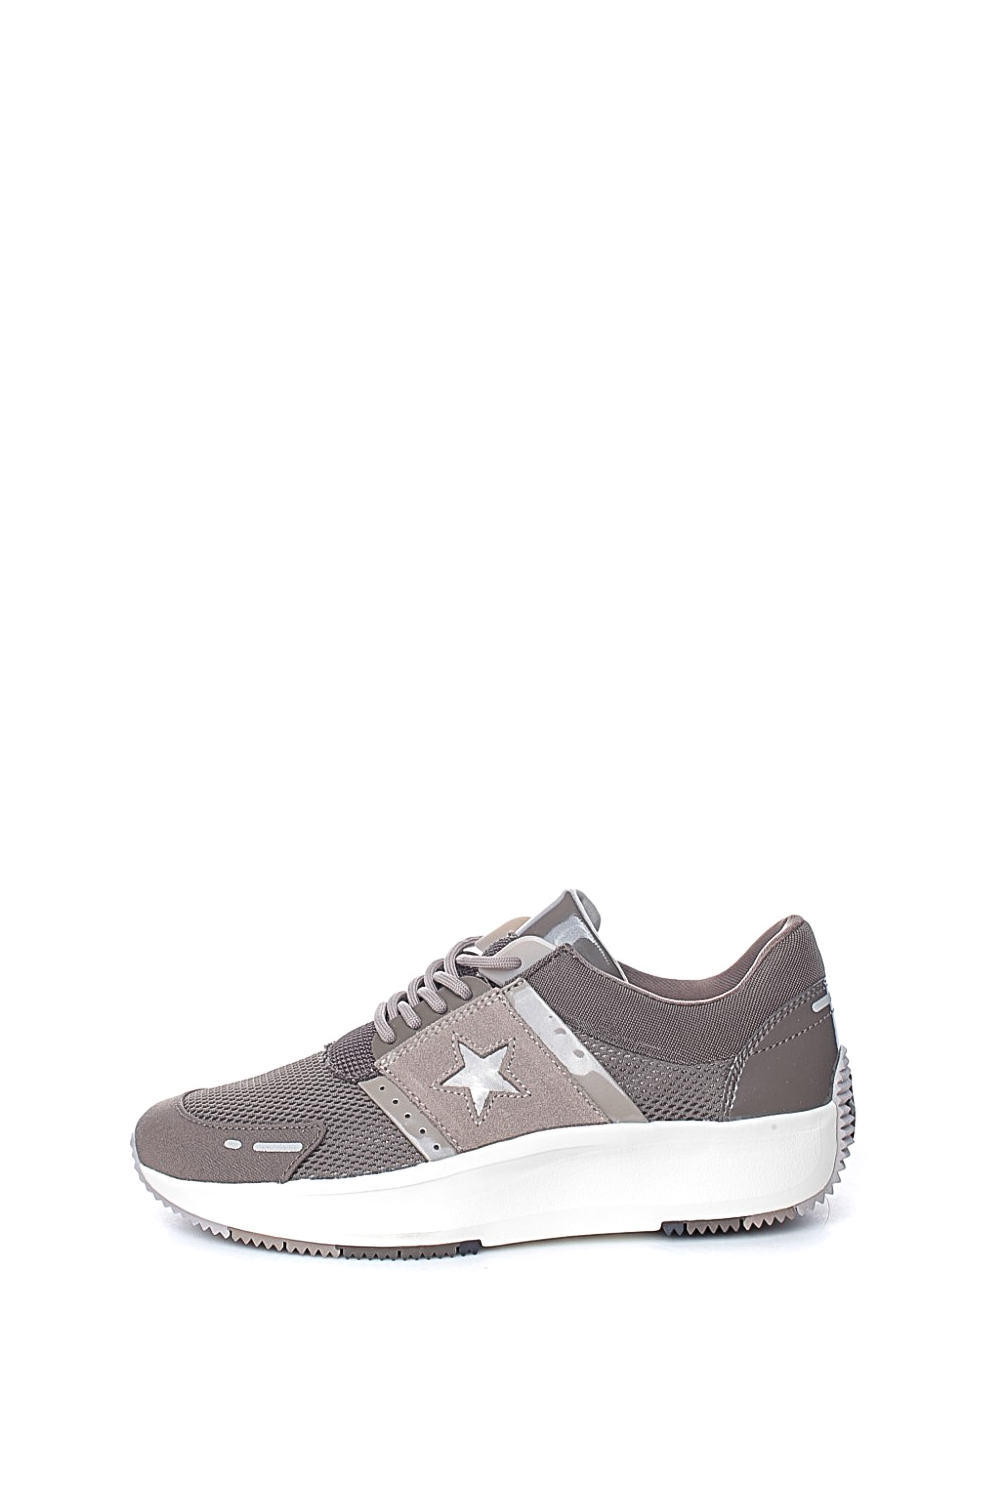 CONVERSE - Unisex sneakers CONVERSE Run Star Ox γκρι Γυναικεία/Παπούτσια/Sneakers